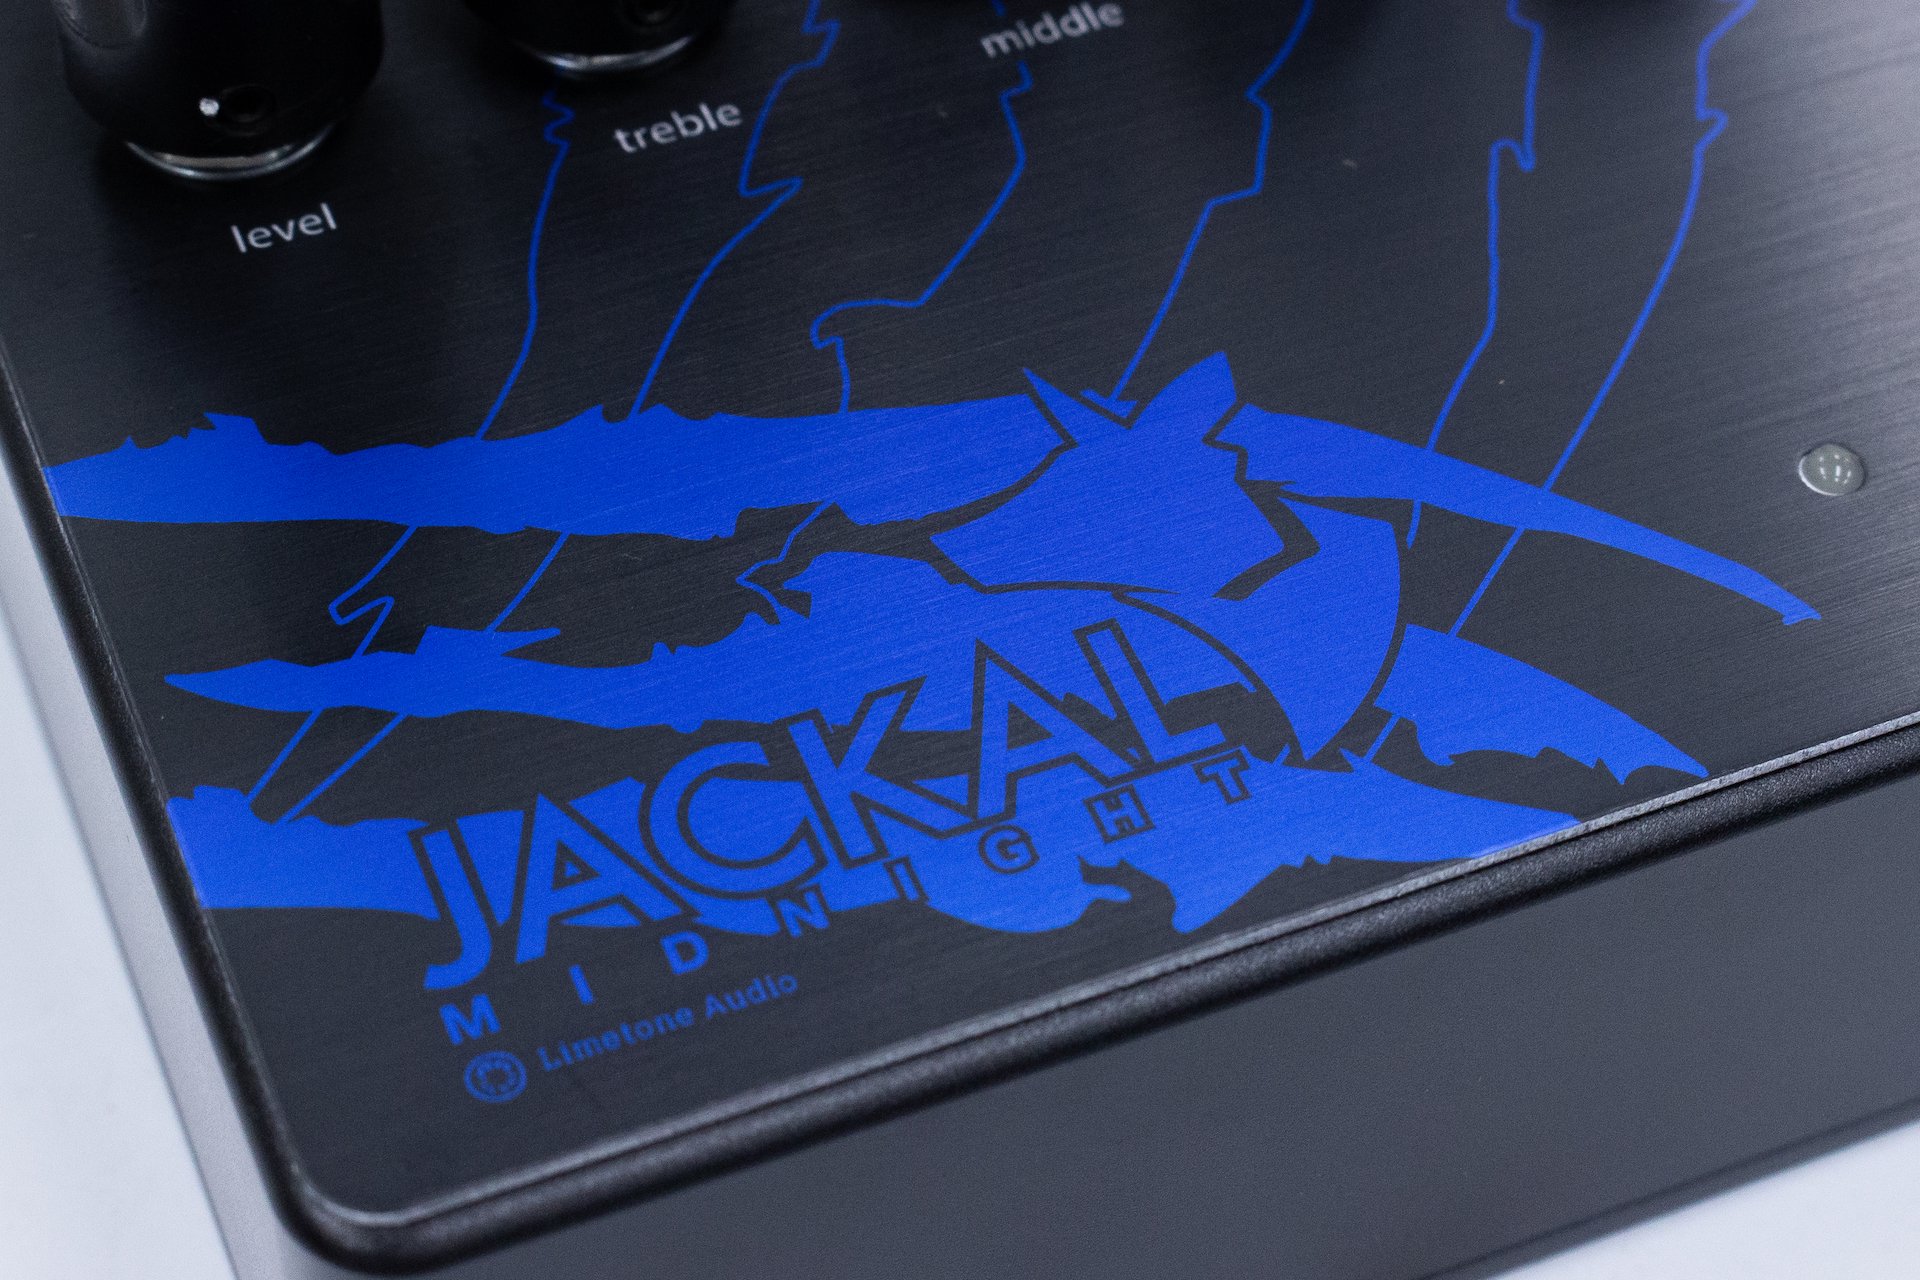 【new】Limetone audio / JACKAL MIDNIGHT【横浜店】 - Geek IN Box